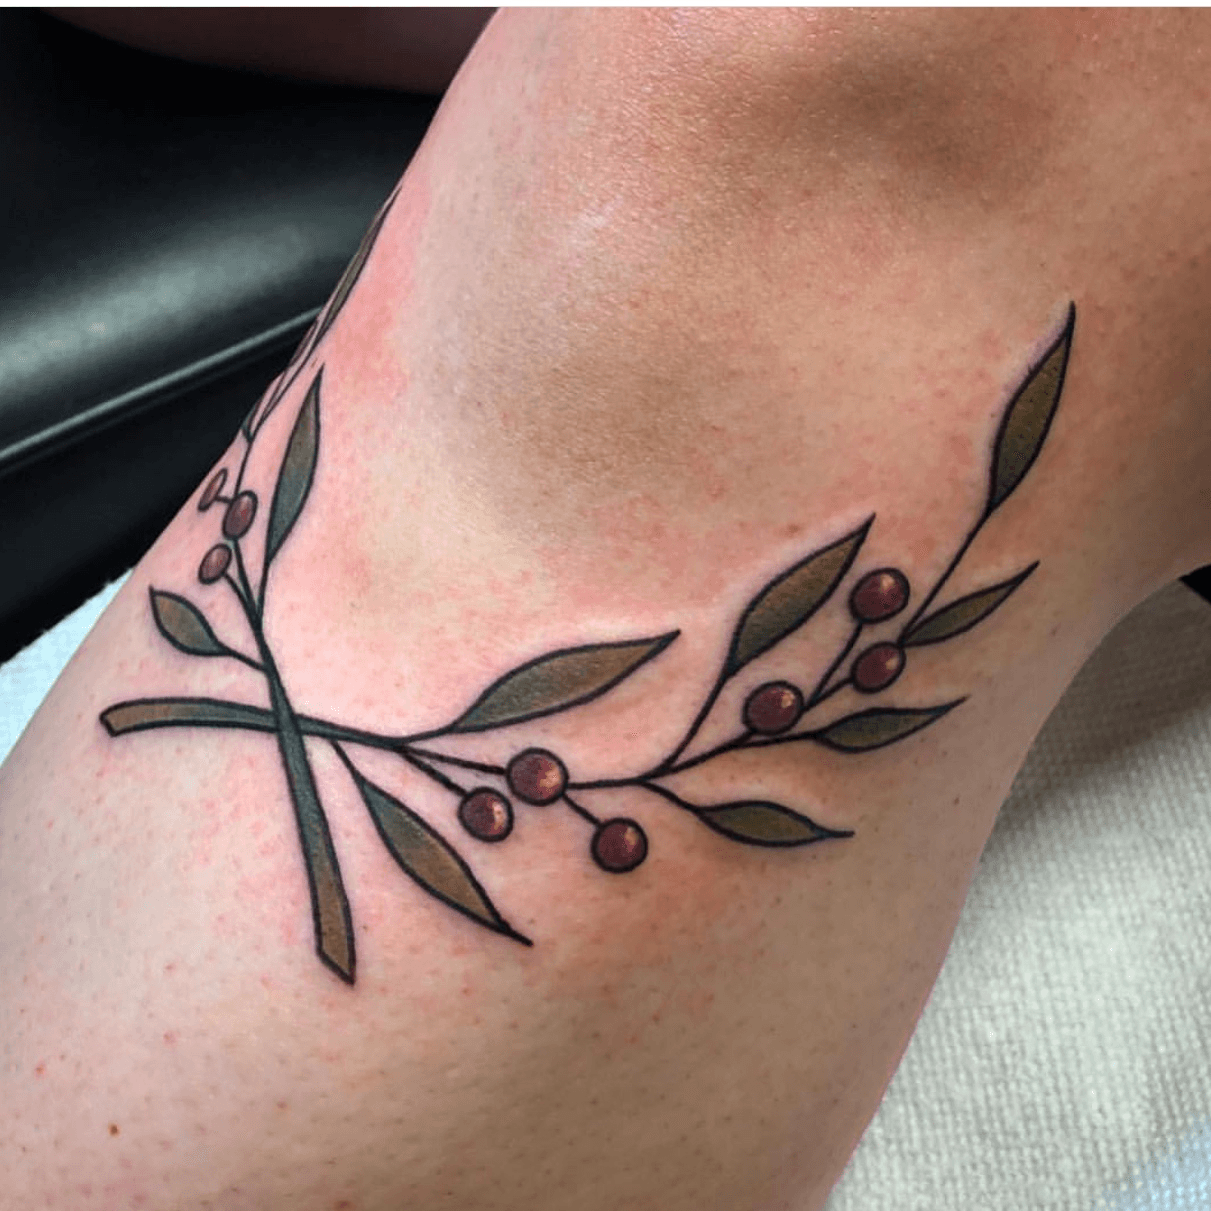 How bad do knee tattoos hurt  Quora